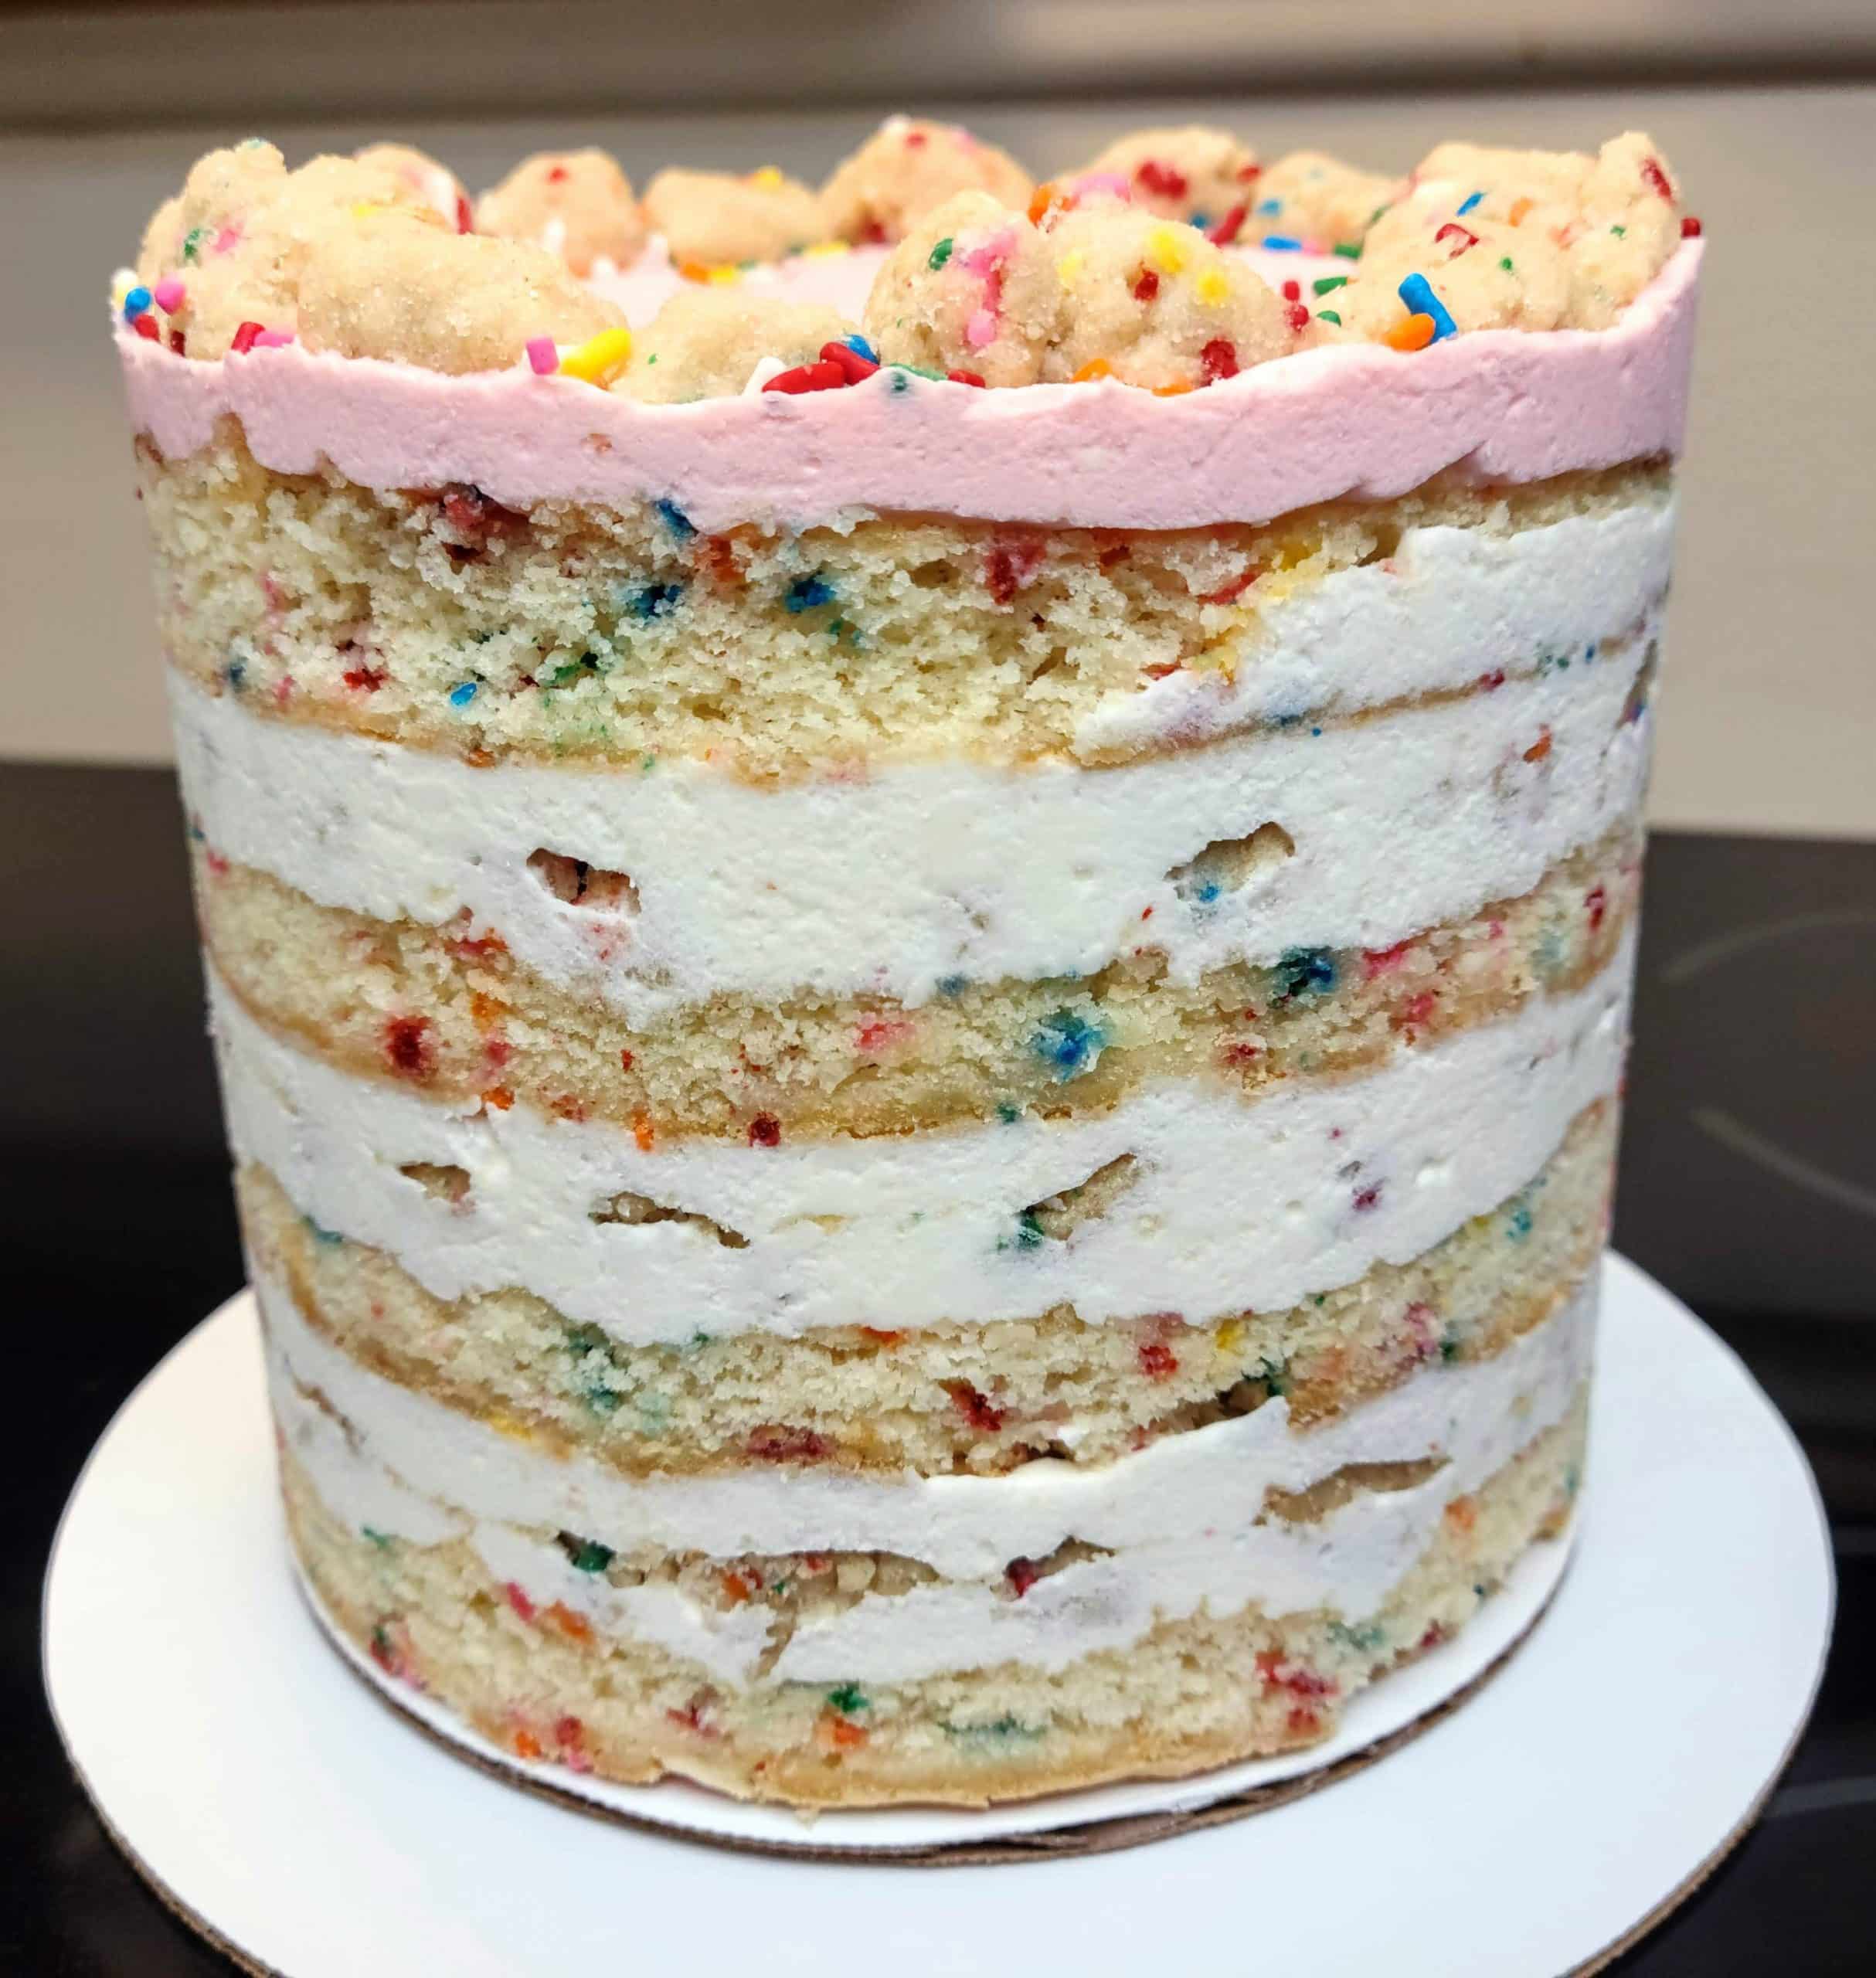 A Milk Bar birthday cake for my best friend. : Baking